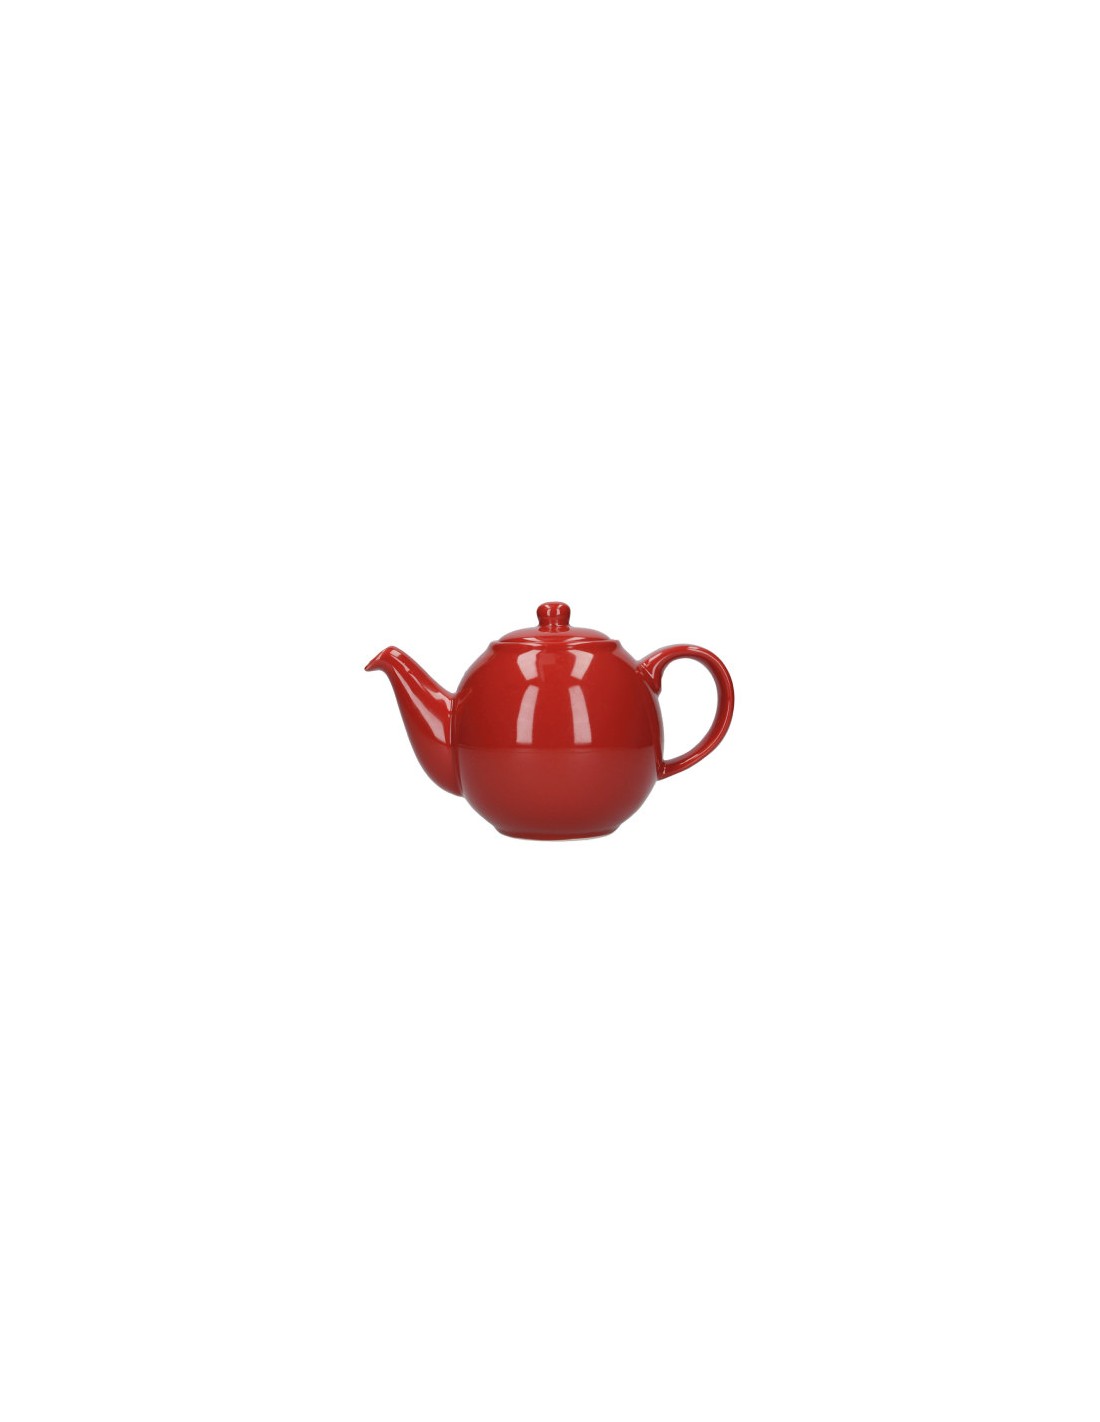 Tetera London Pottery Red 26,58 € Capacidad 900ml - 4 tazas - CaféTéArte